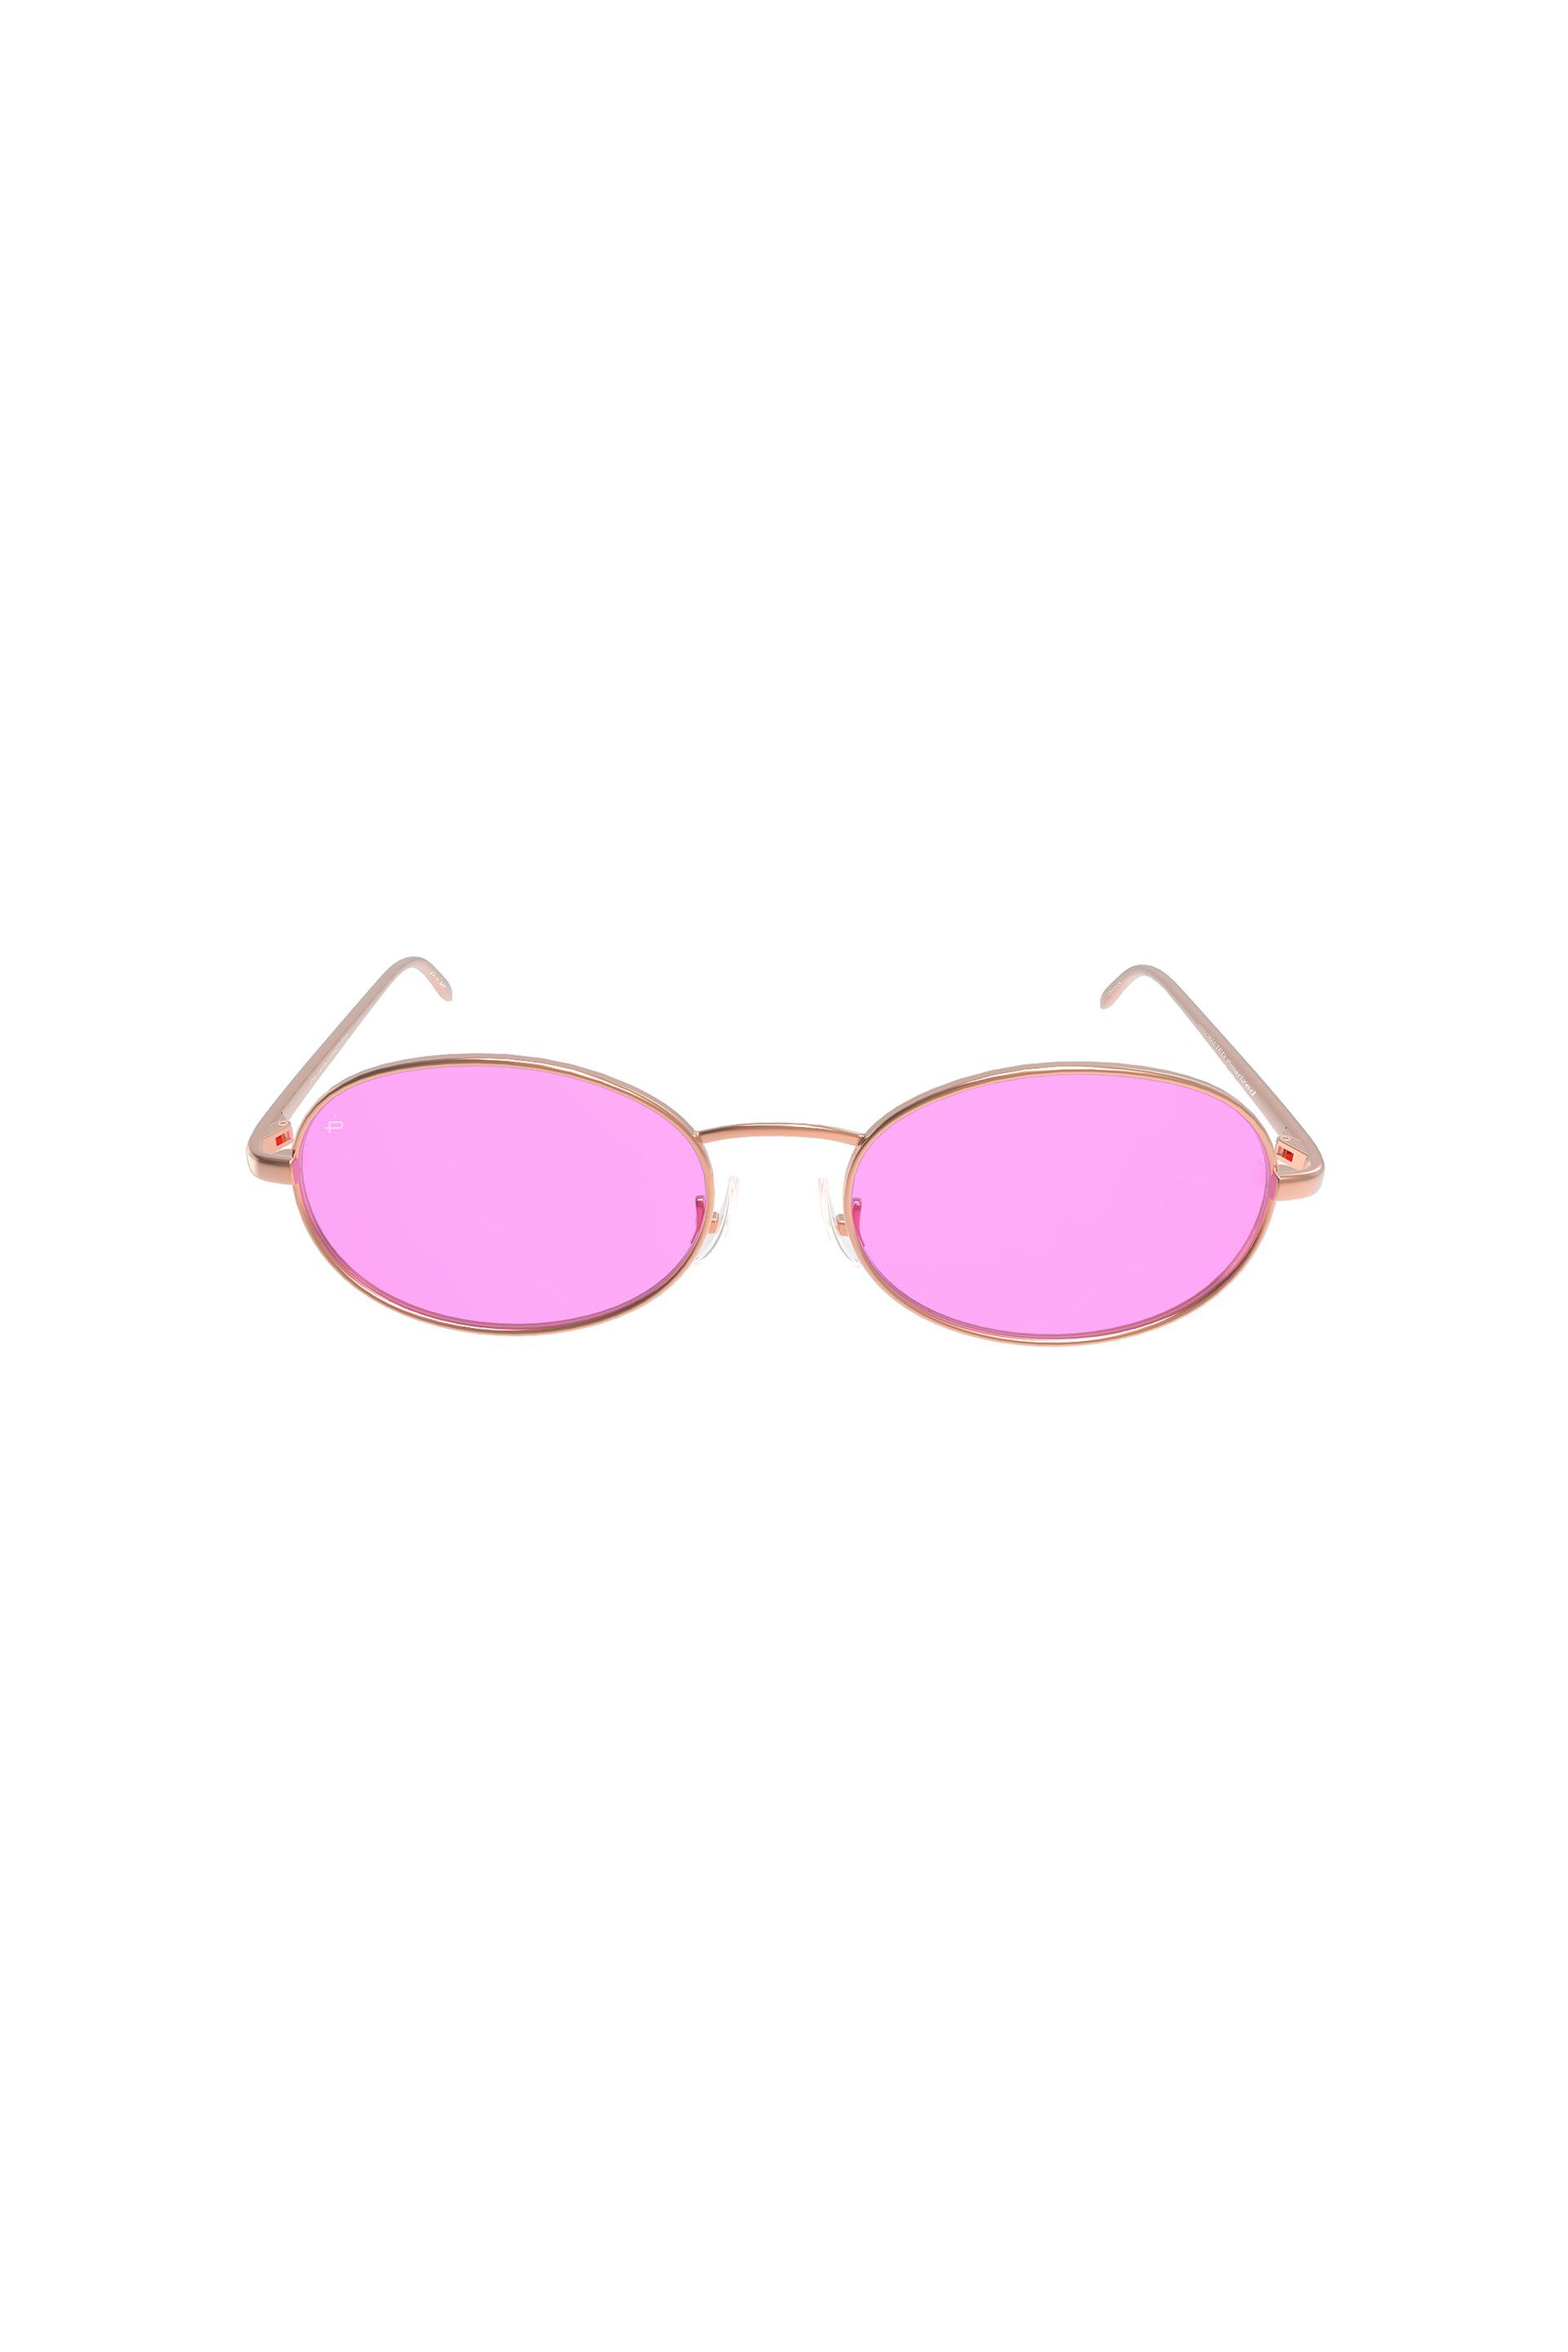 PRIVÉ REVAUX - The Candy Sunglasses